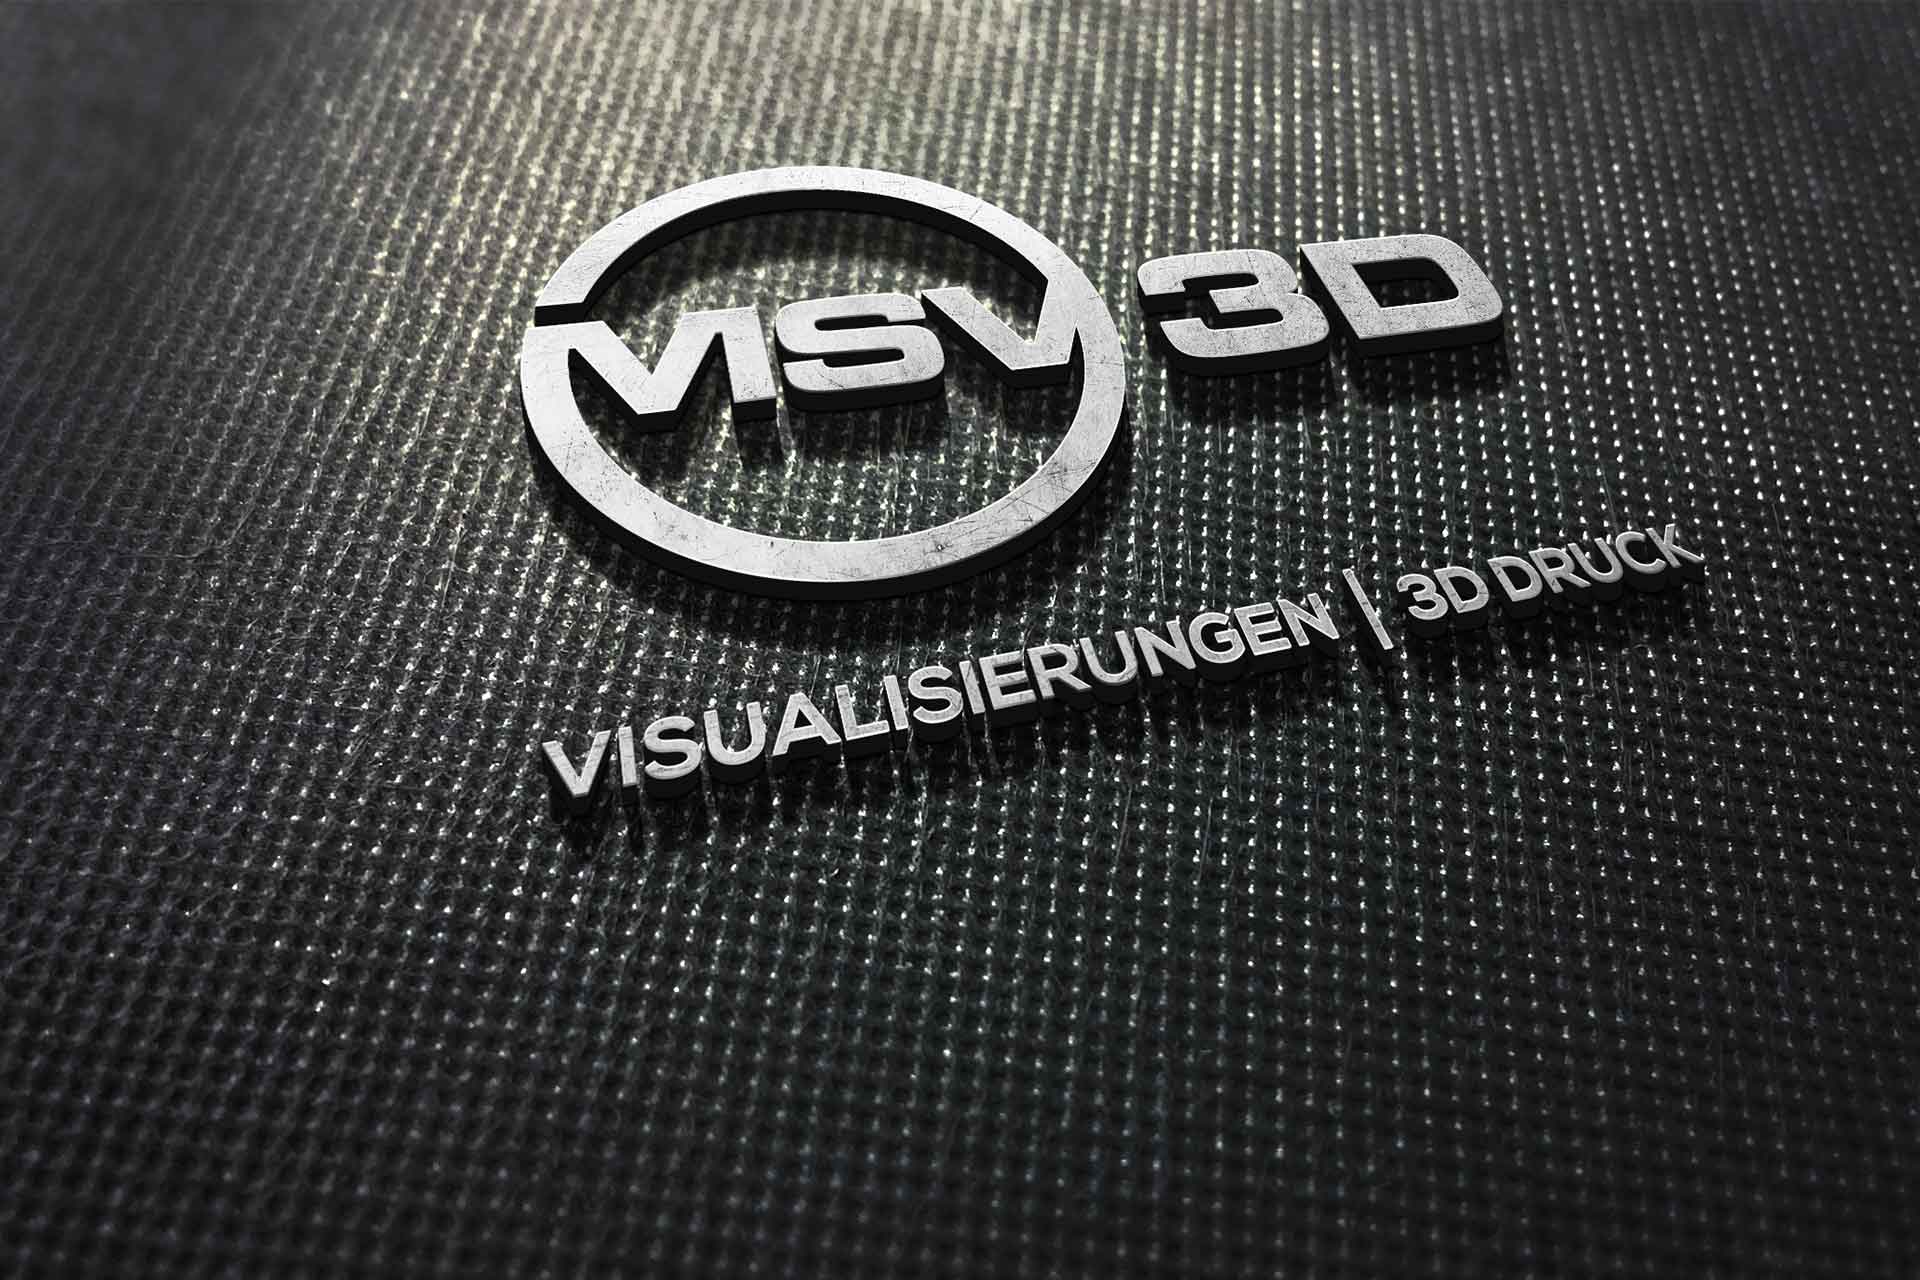 Logo MSV-3D GmbH